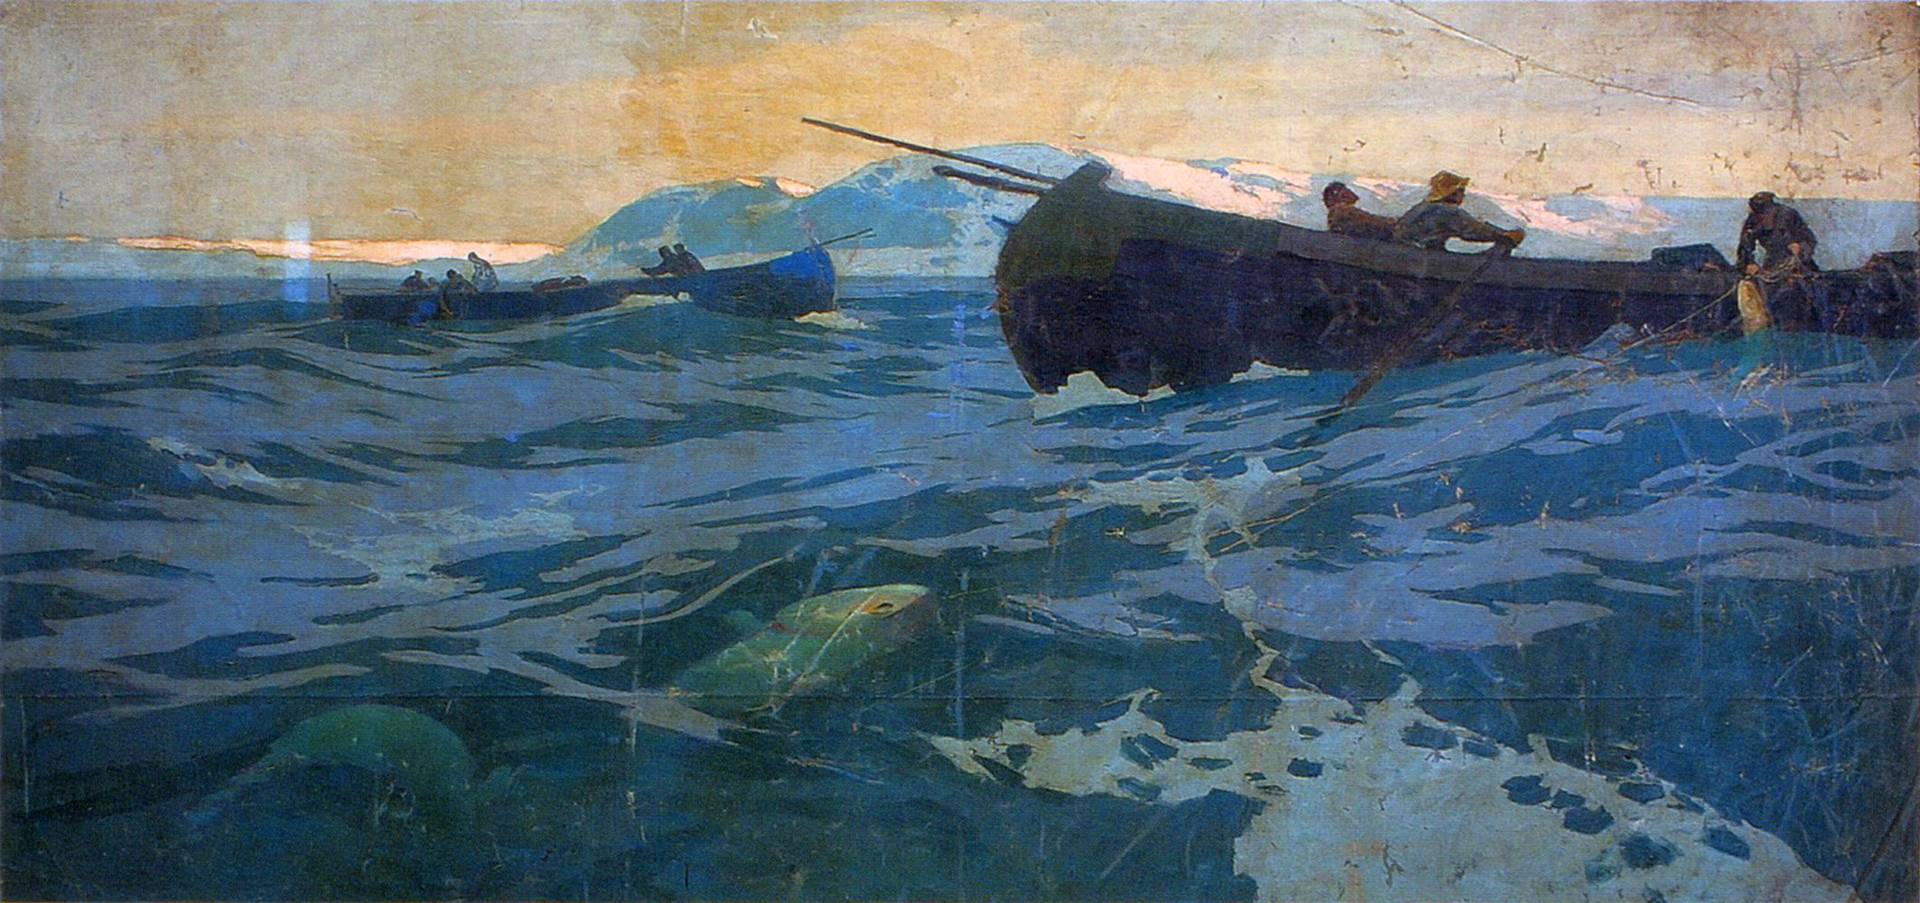 Константин Коровин. Ловля рыбы на Мурманском море. 1896